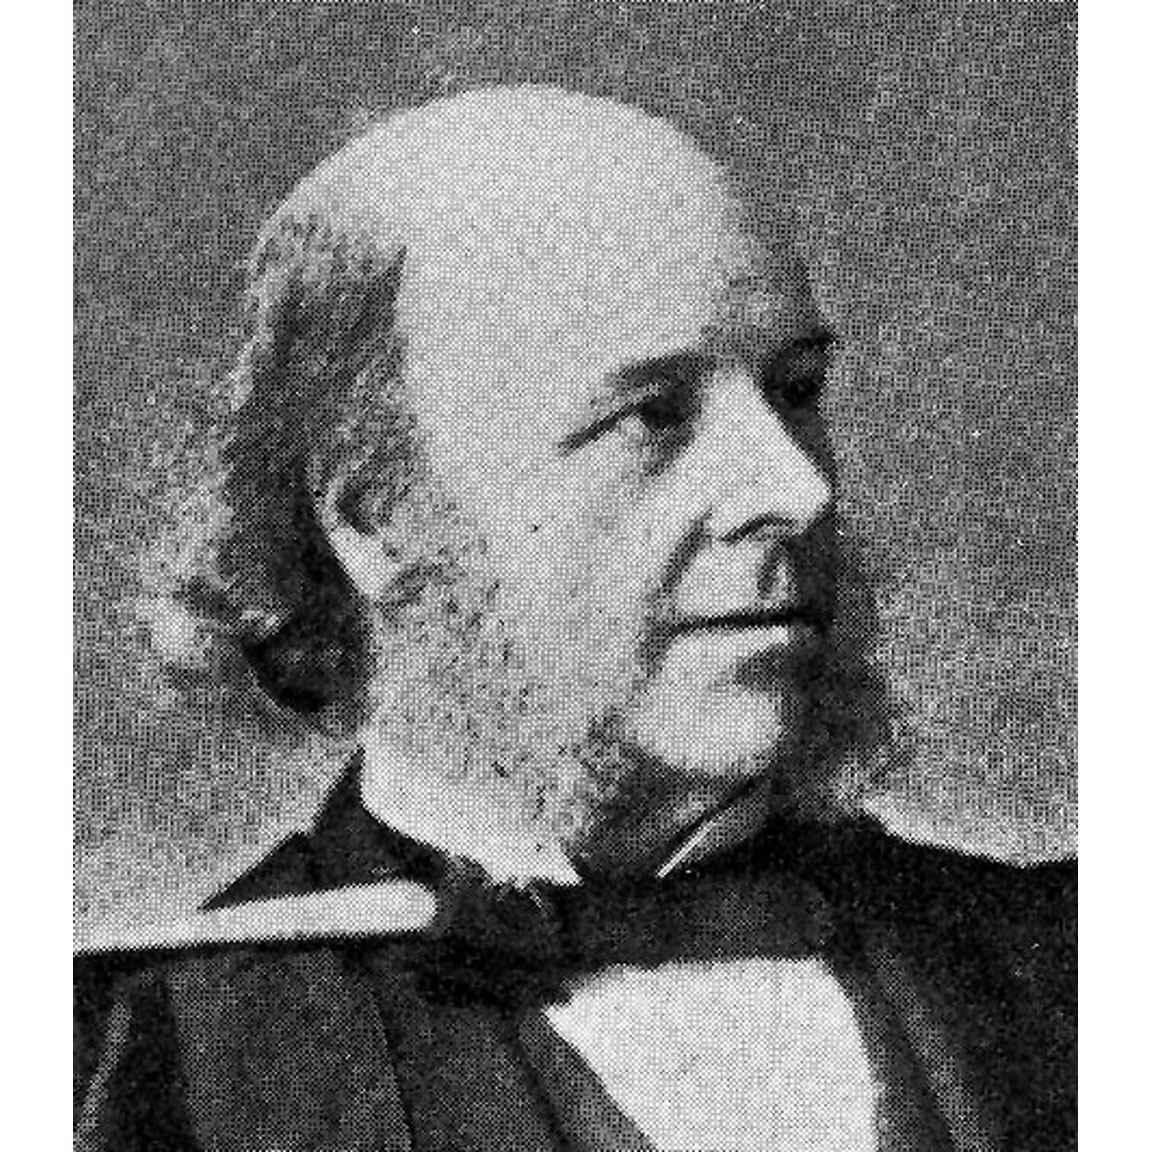 HICKS-JohnBraxton(1823-1897)